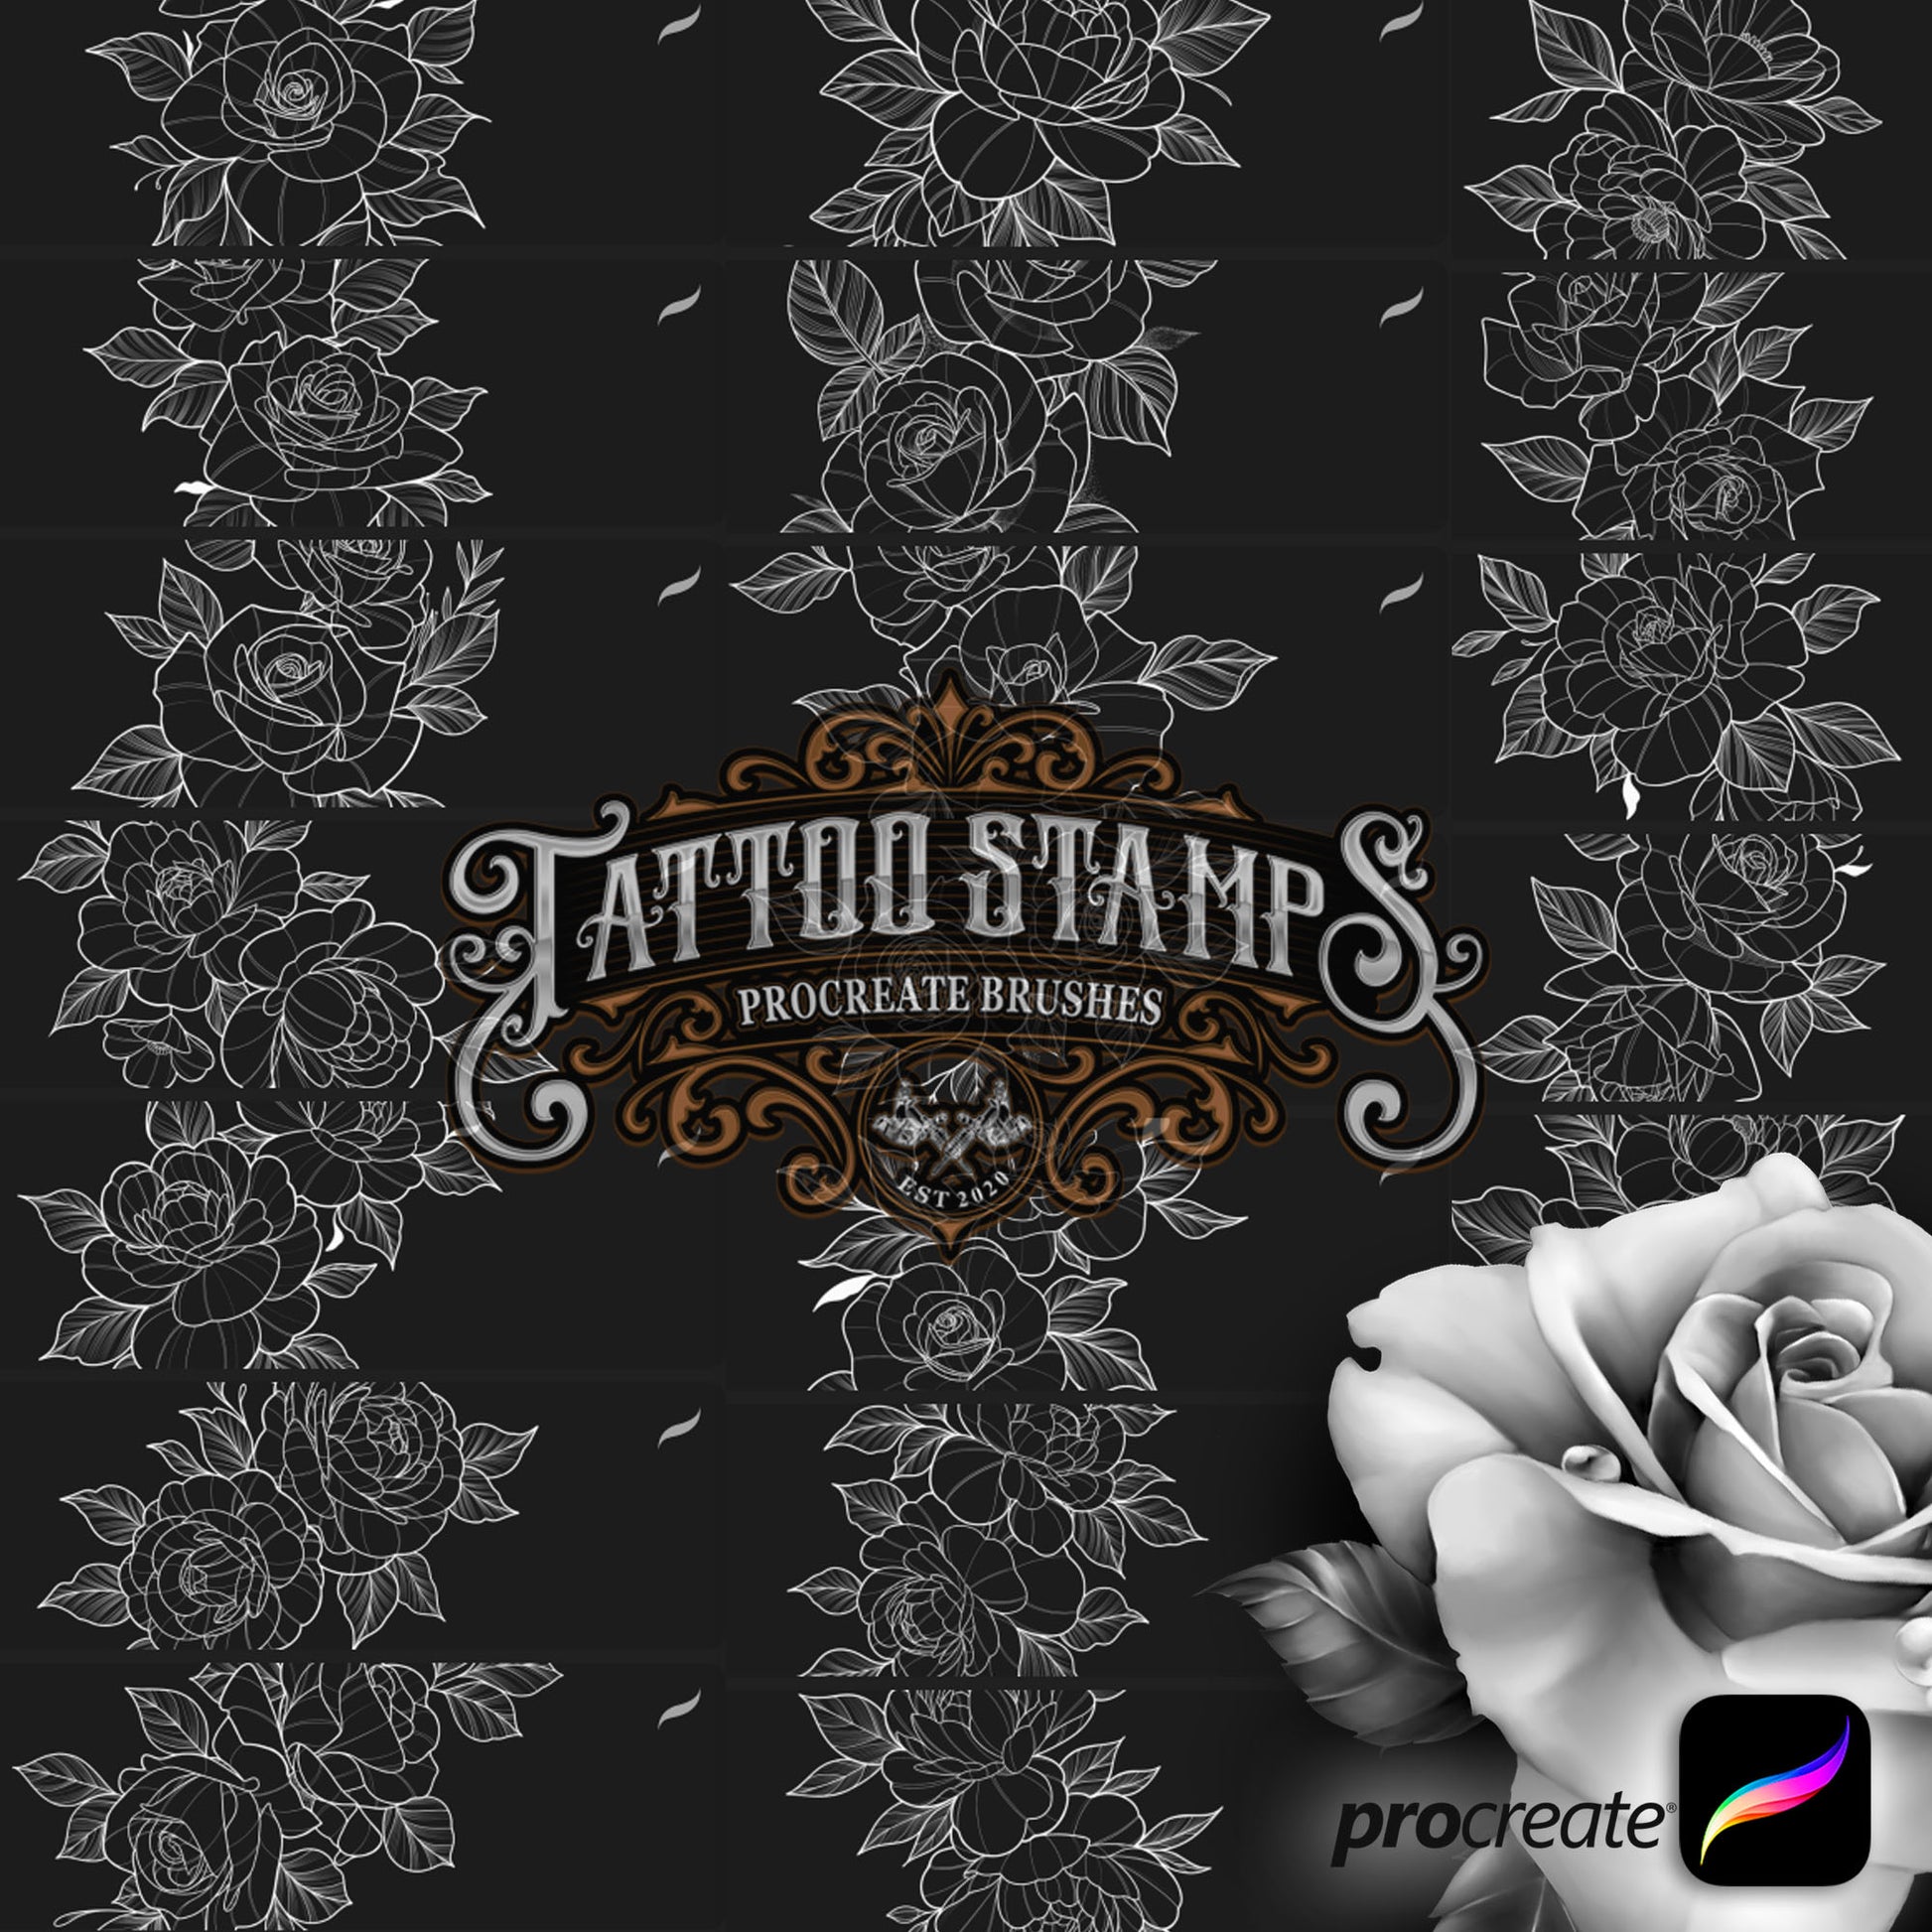 57 Original Flowers Tattoo Procreate Brushes for iPad & iPad pro created by TattooStampsArt Pro Tattoo Artists